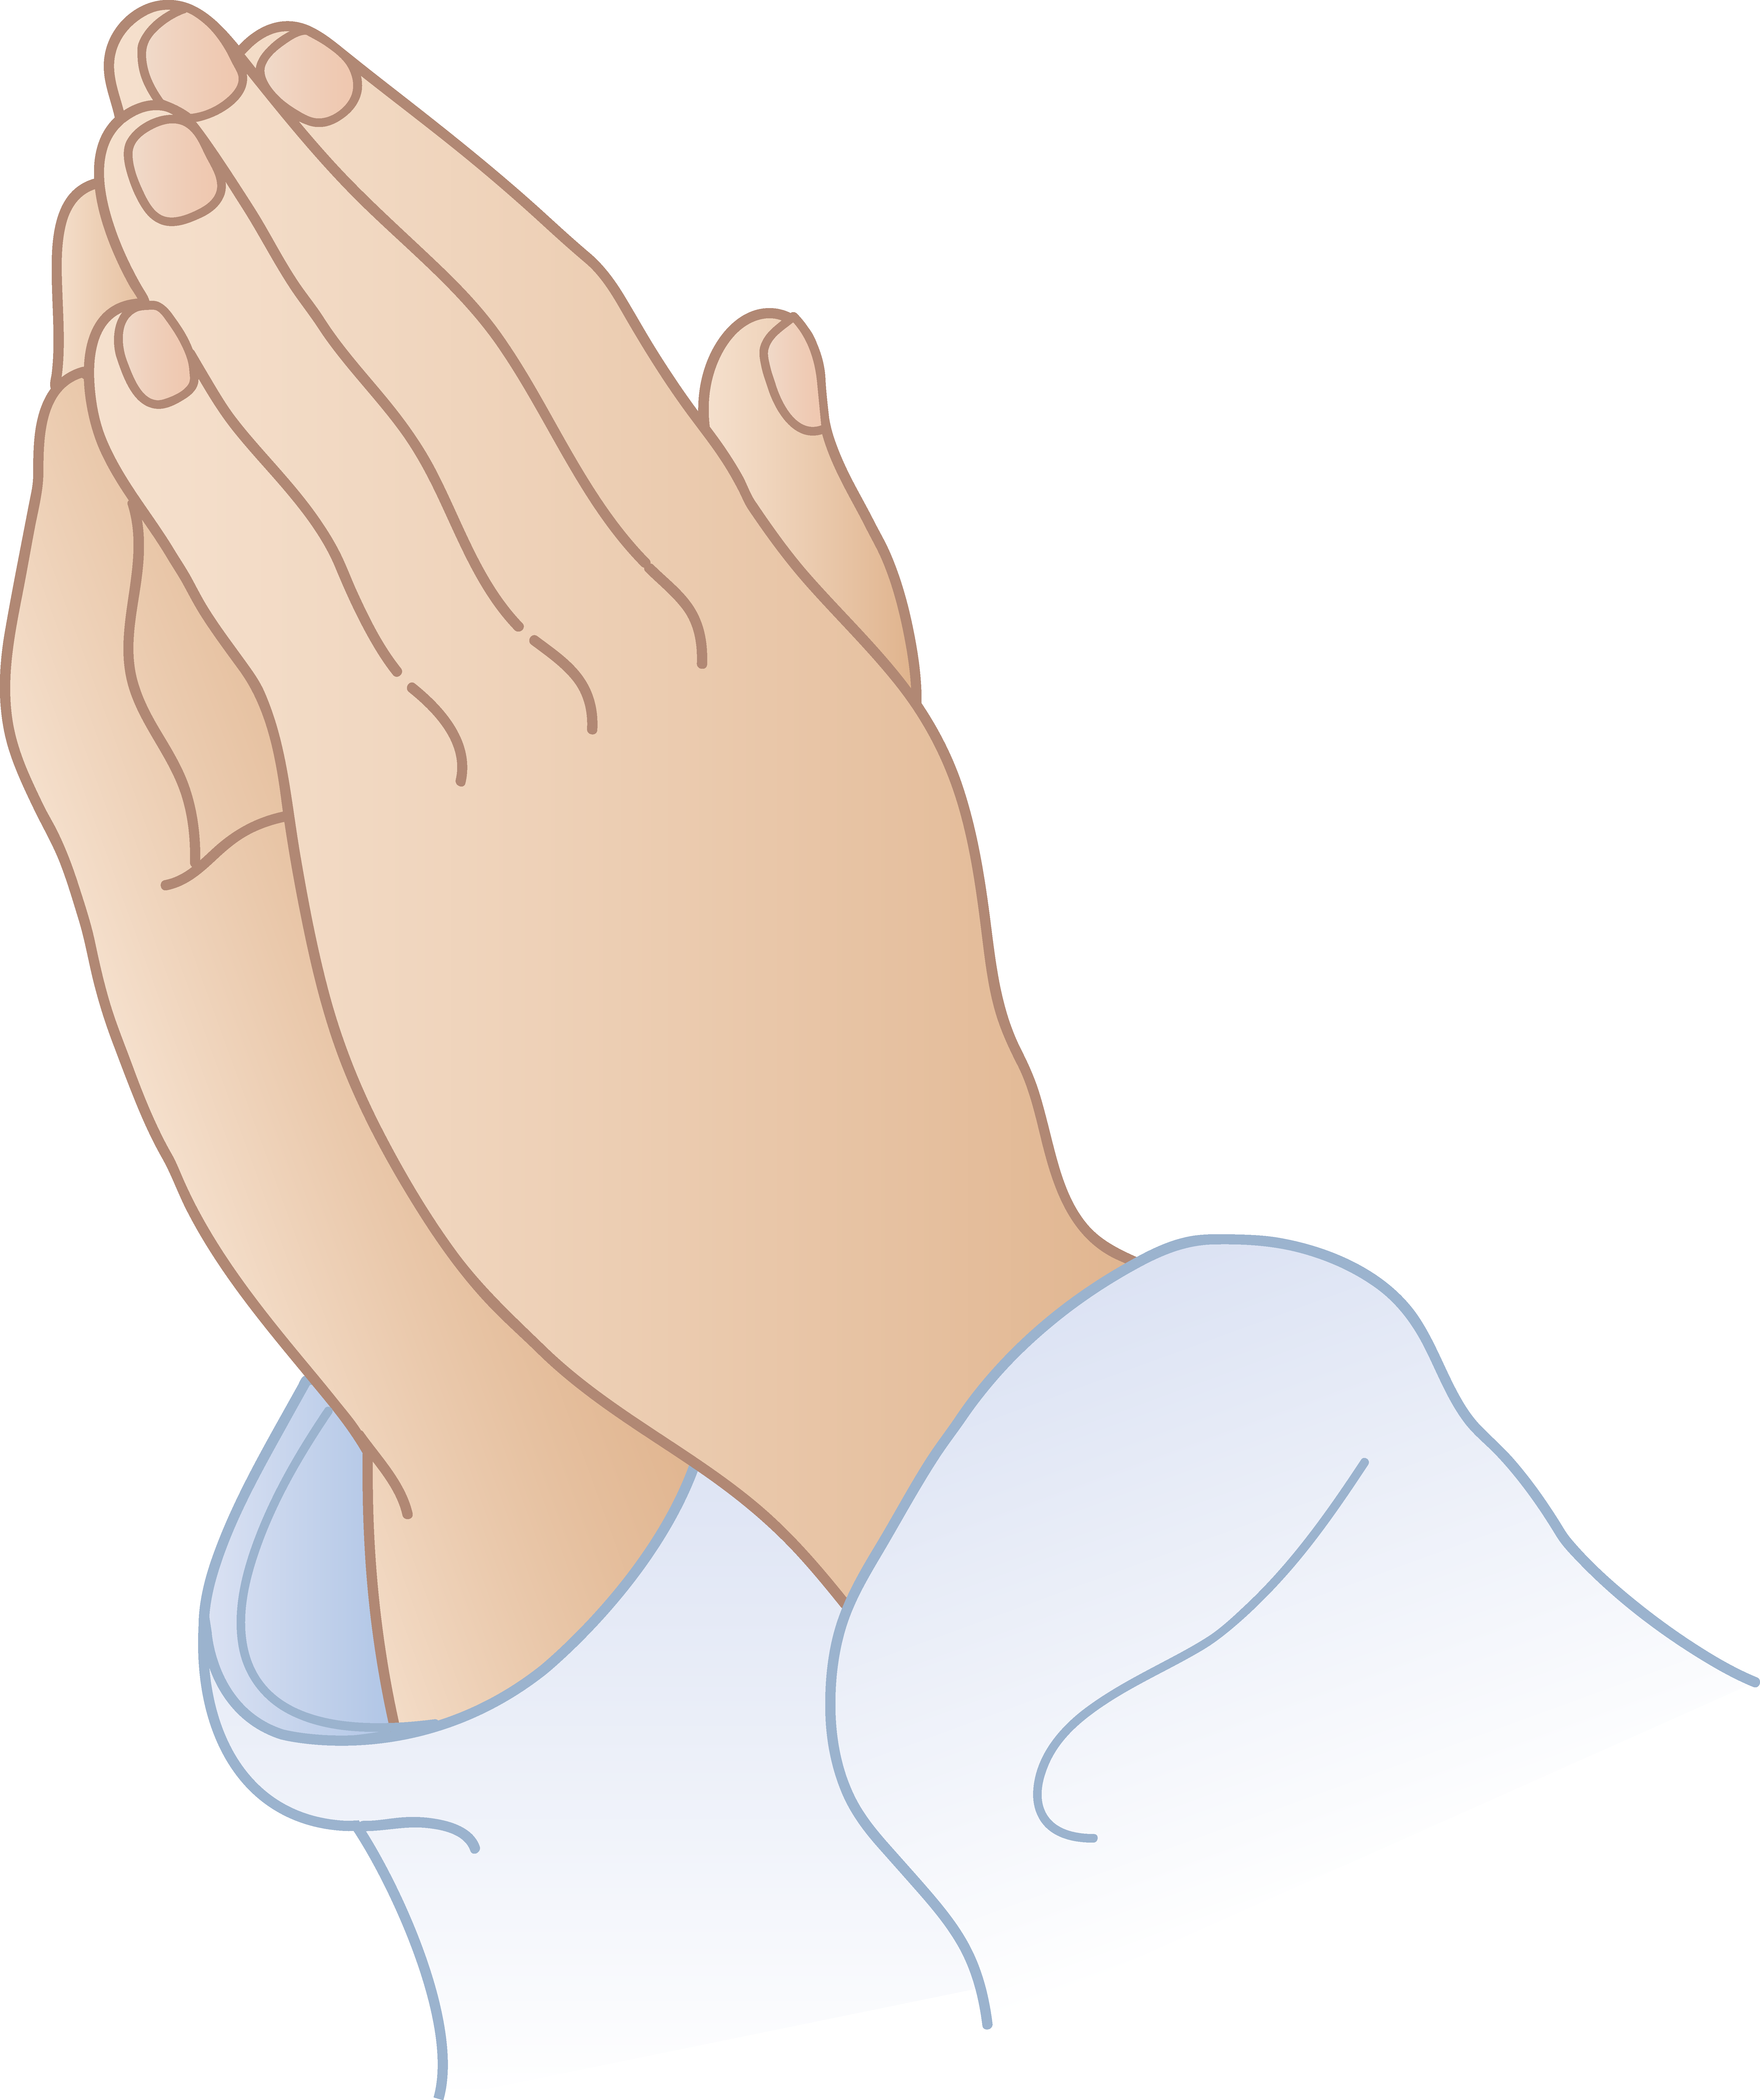 Praying hands free clip. Secret clipart quiet hand